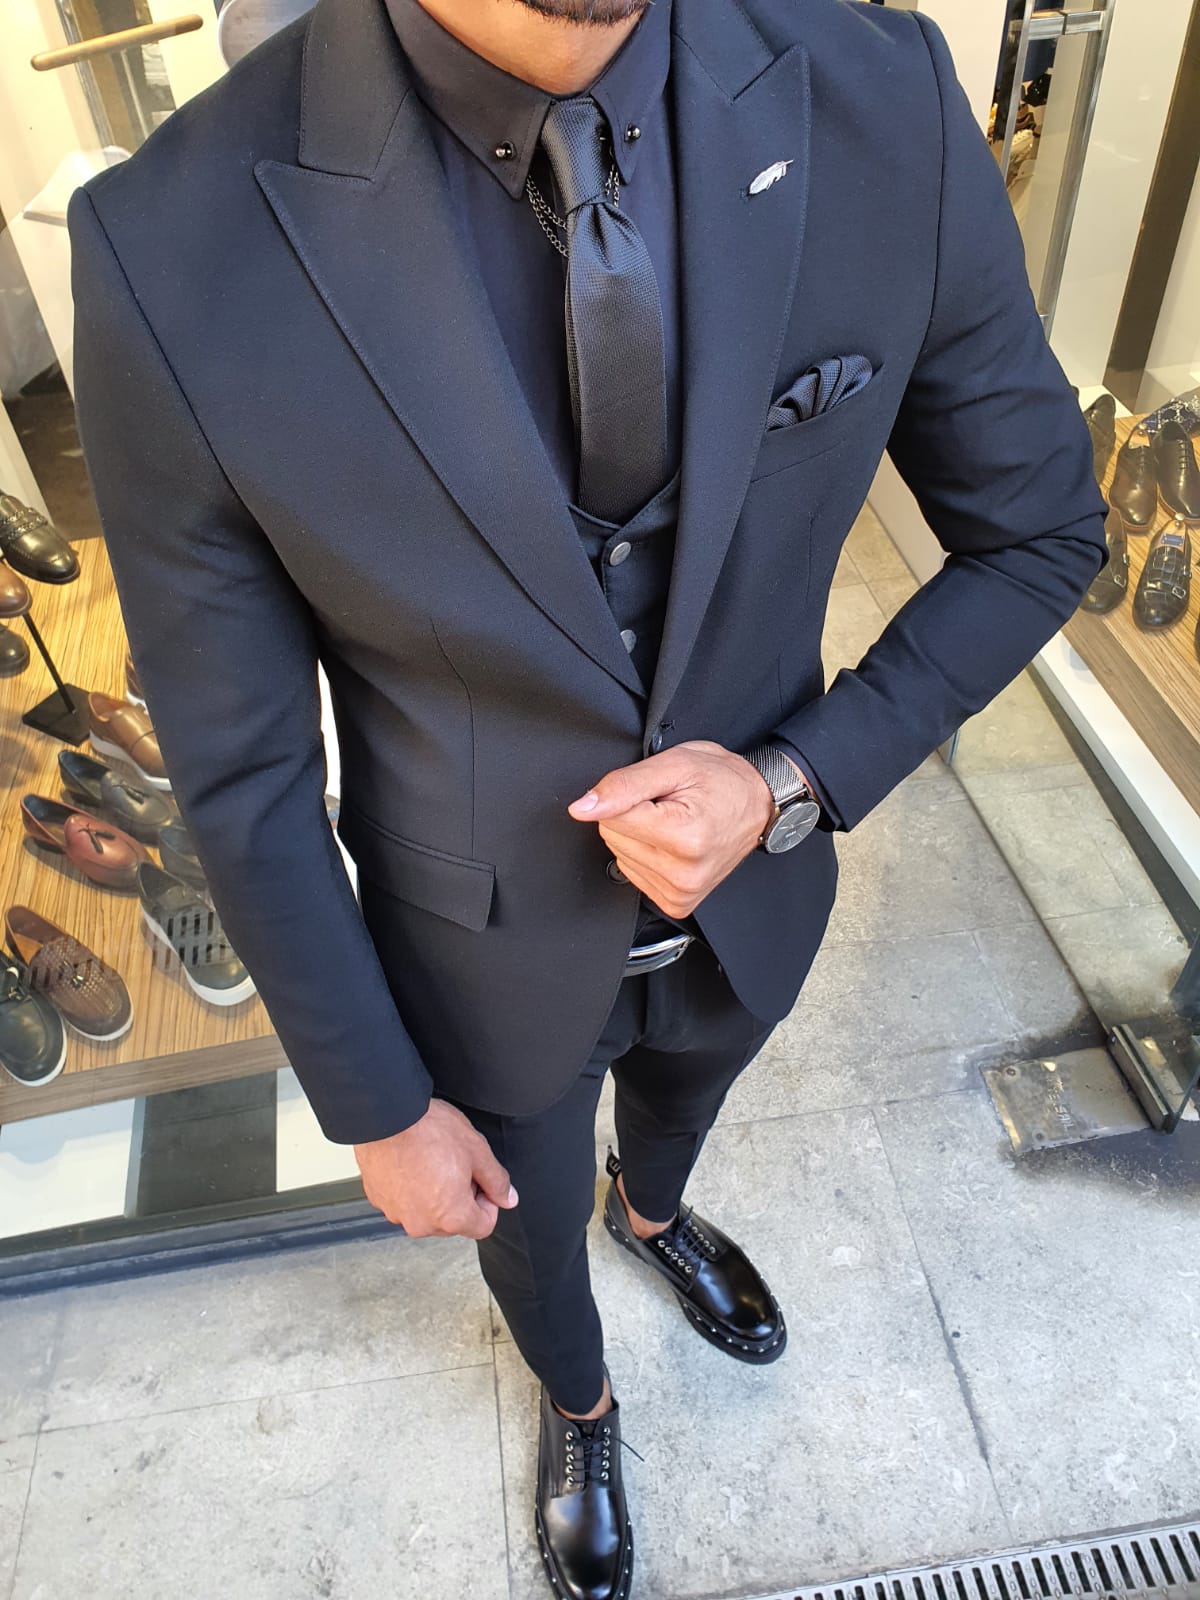 All Black Suits For Men Slim Fit